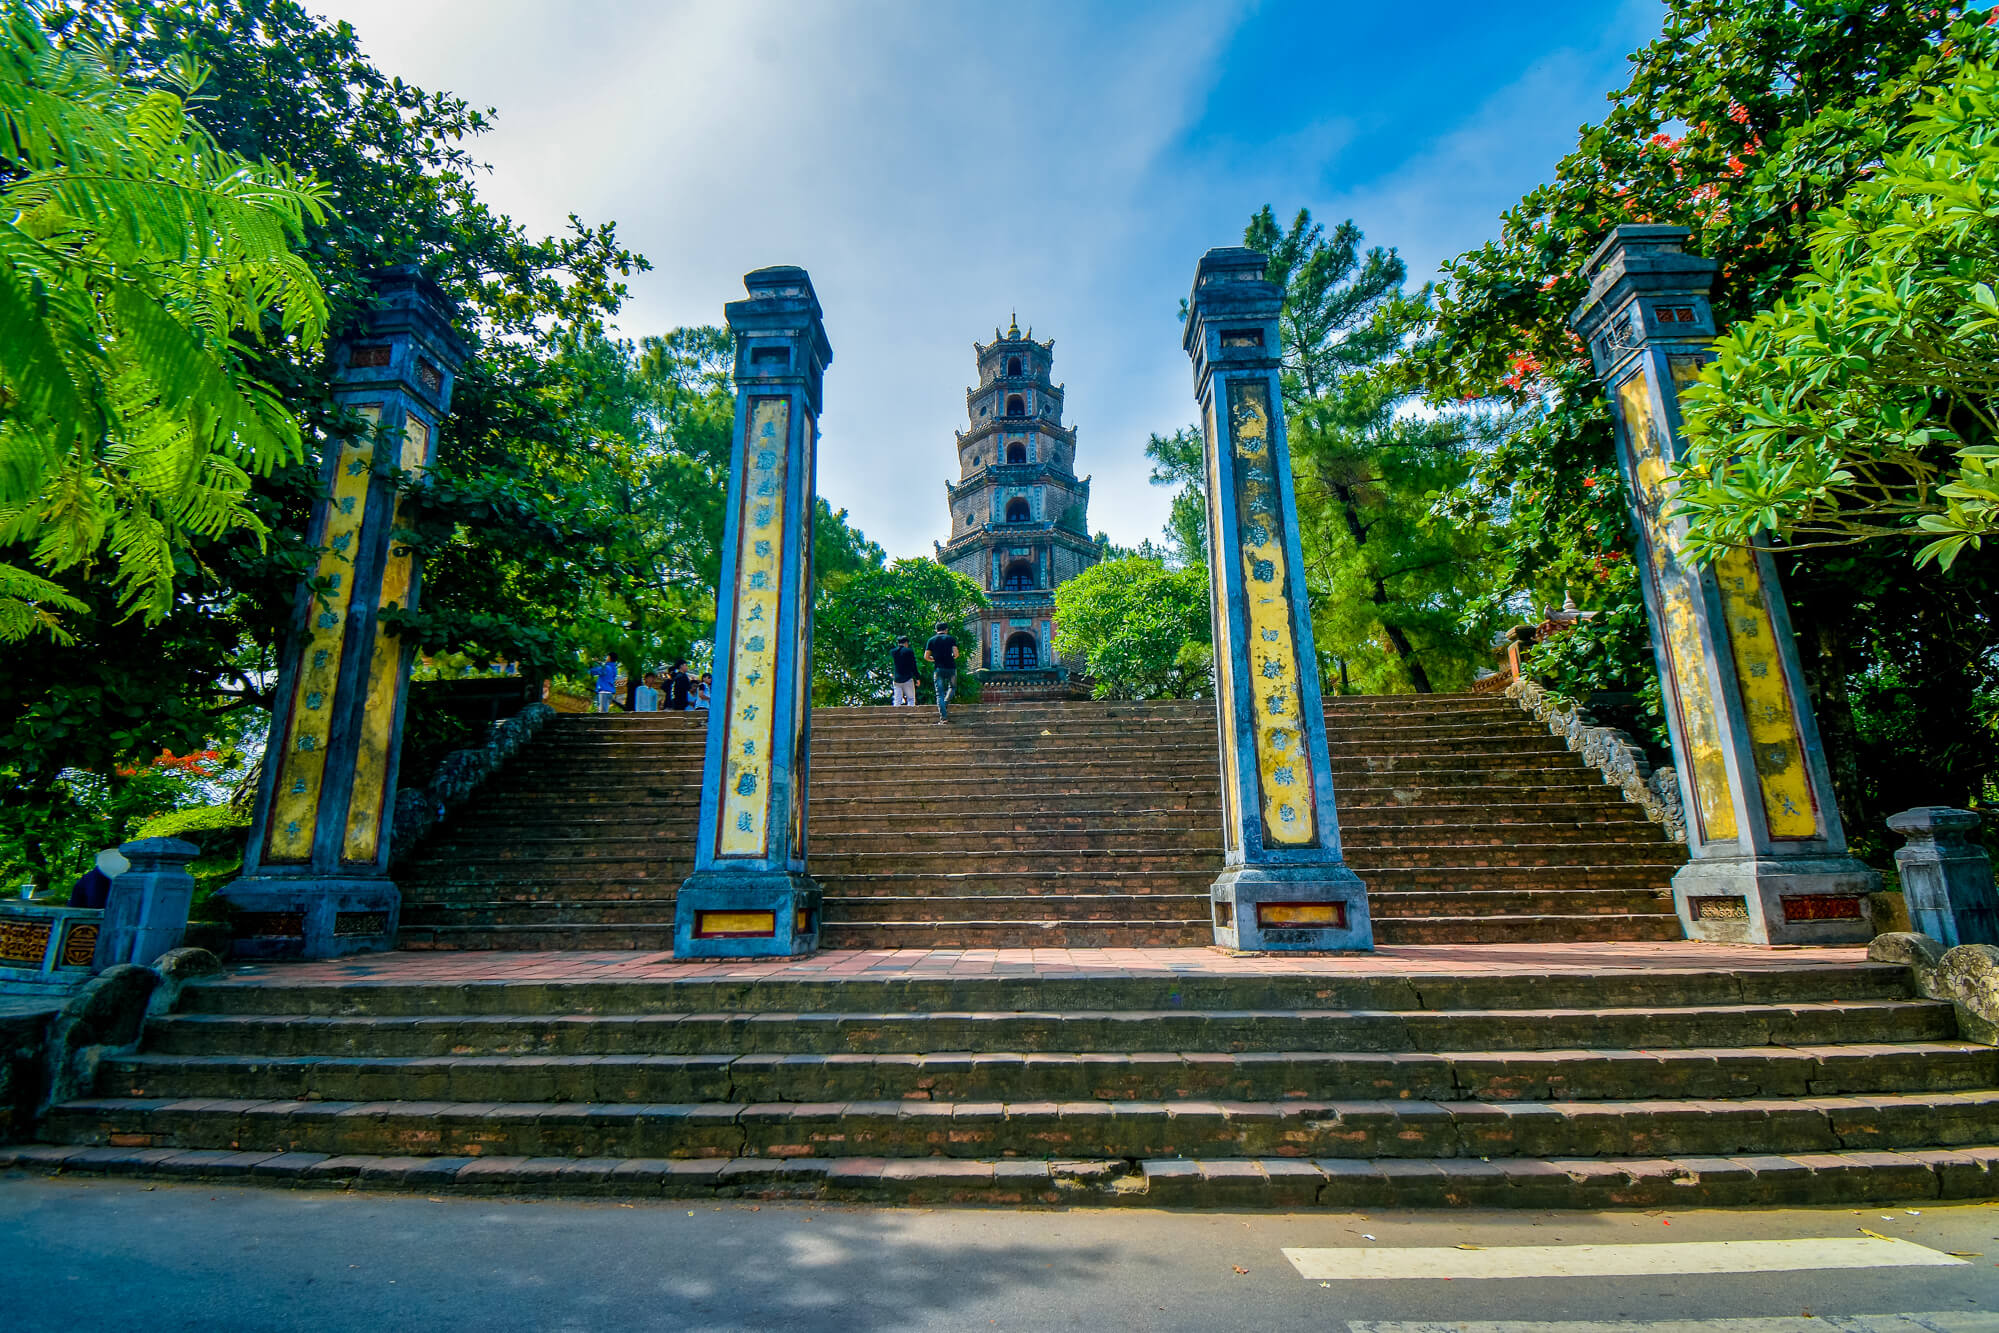 Thien Mu Pagoda has its legend